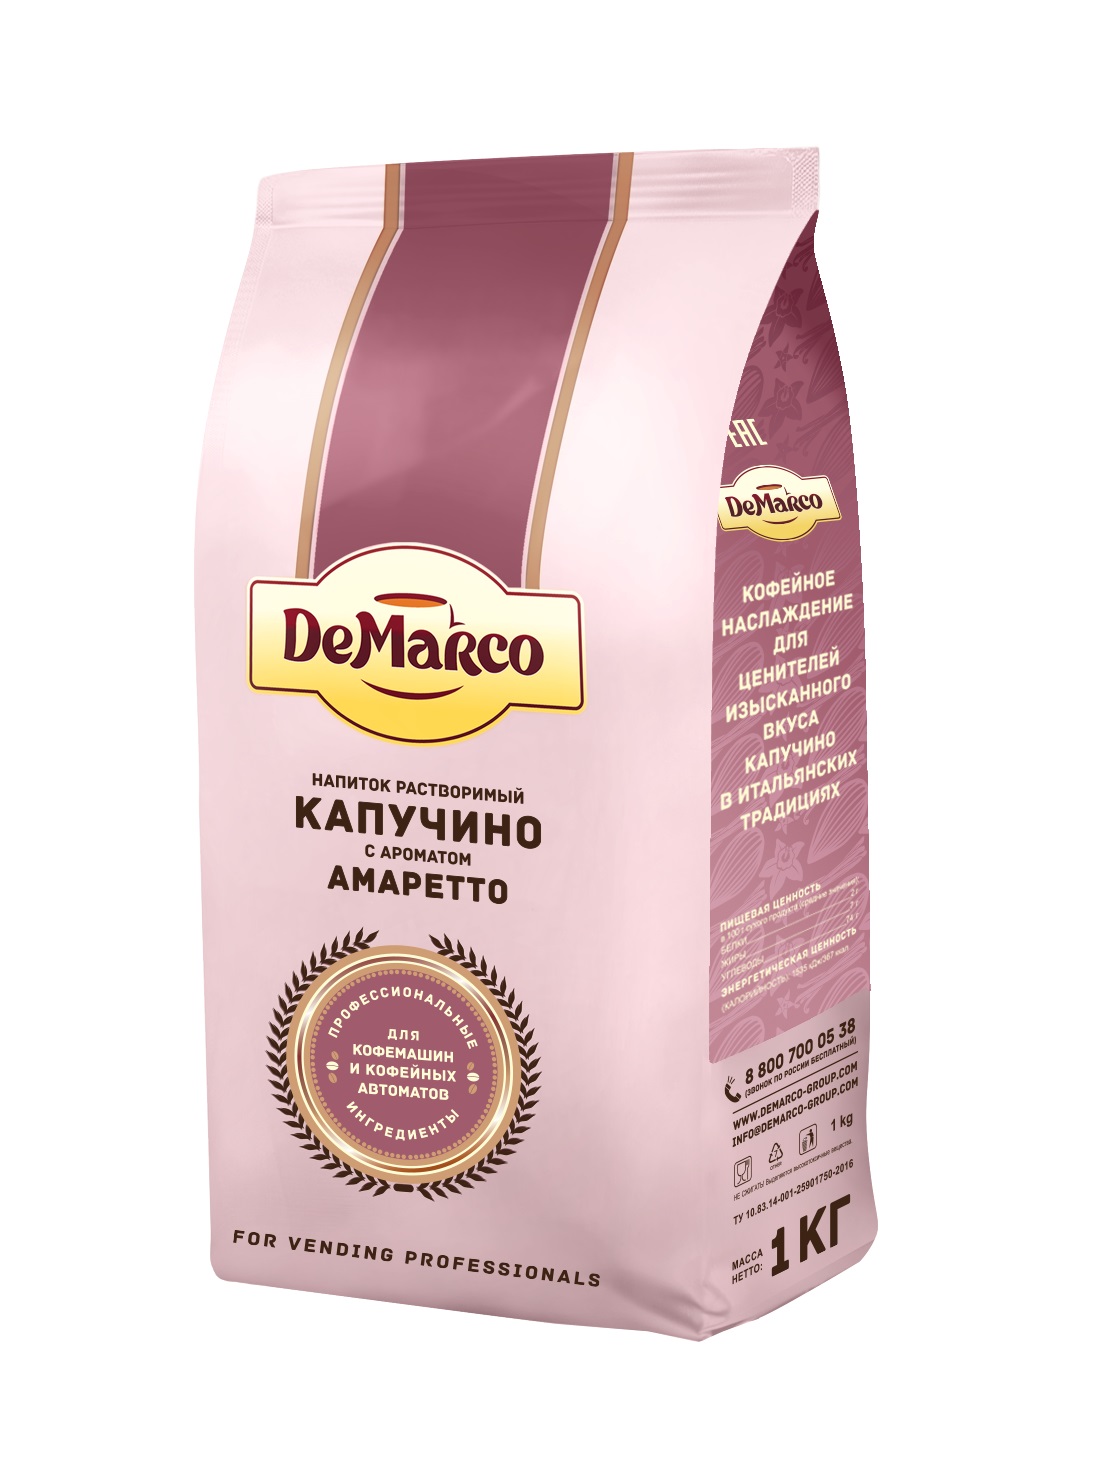 Напиток растворимый DeMarco Капучино с ароматом Амаретто 1,0 кг.